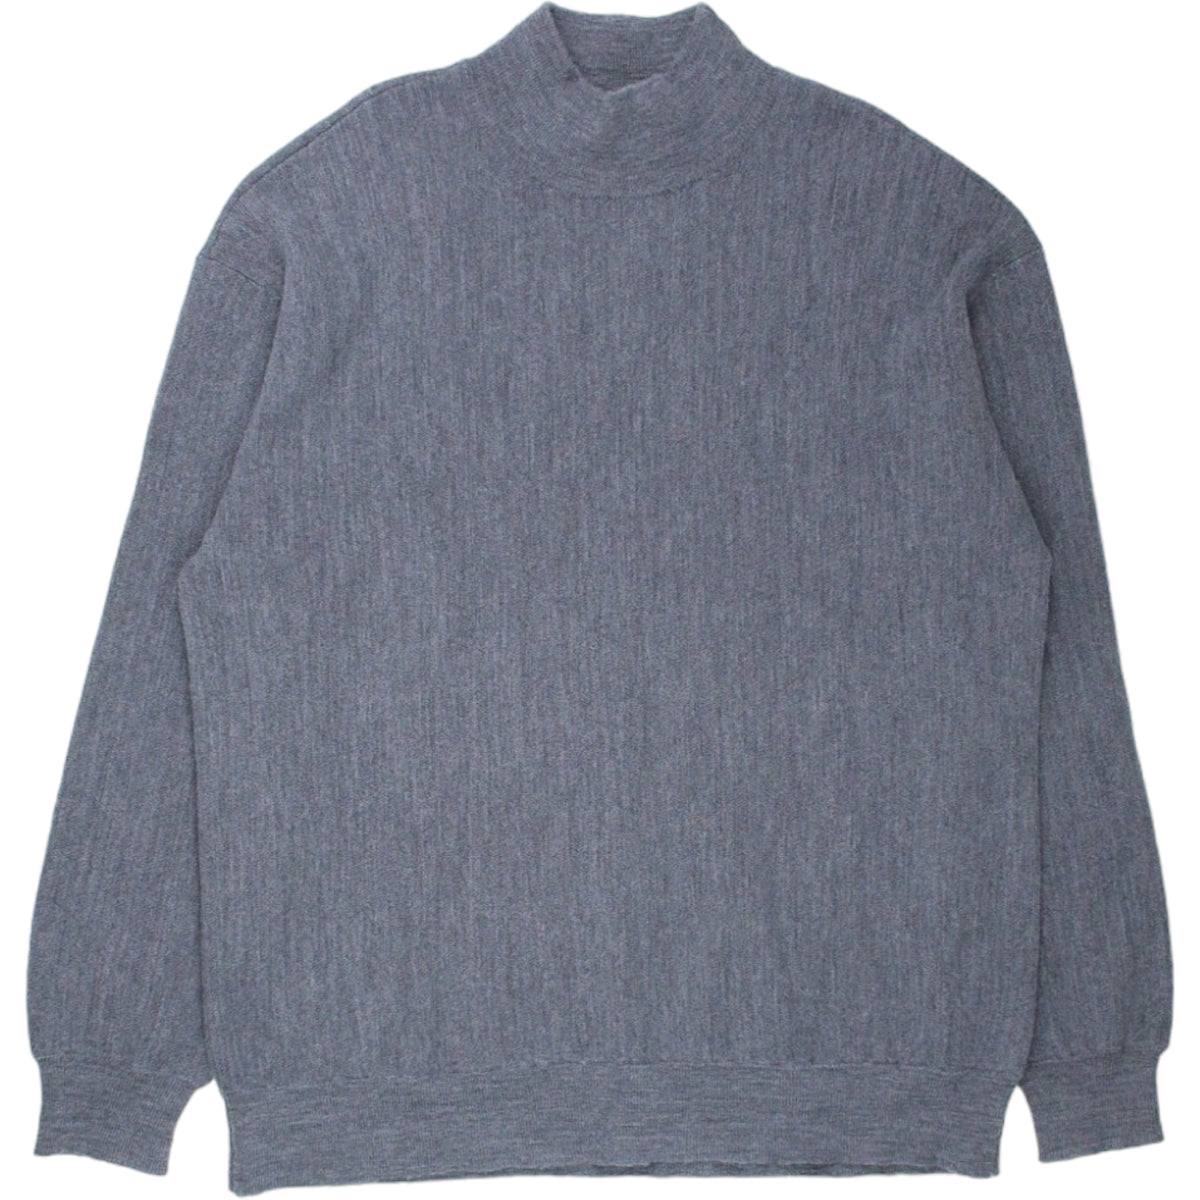 YMC Grey Marl Mock Neck Sweater